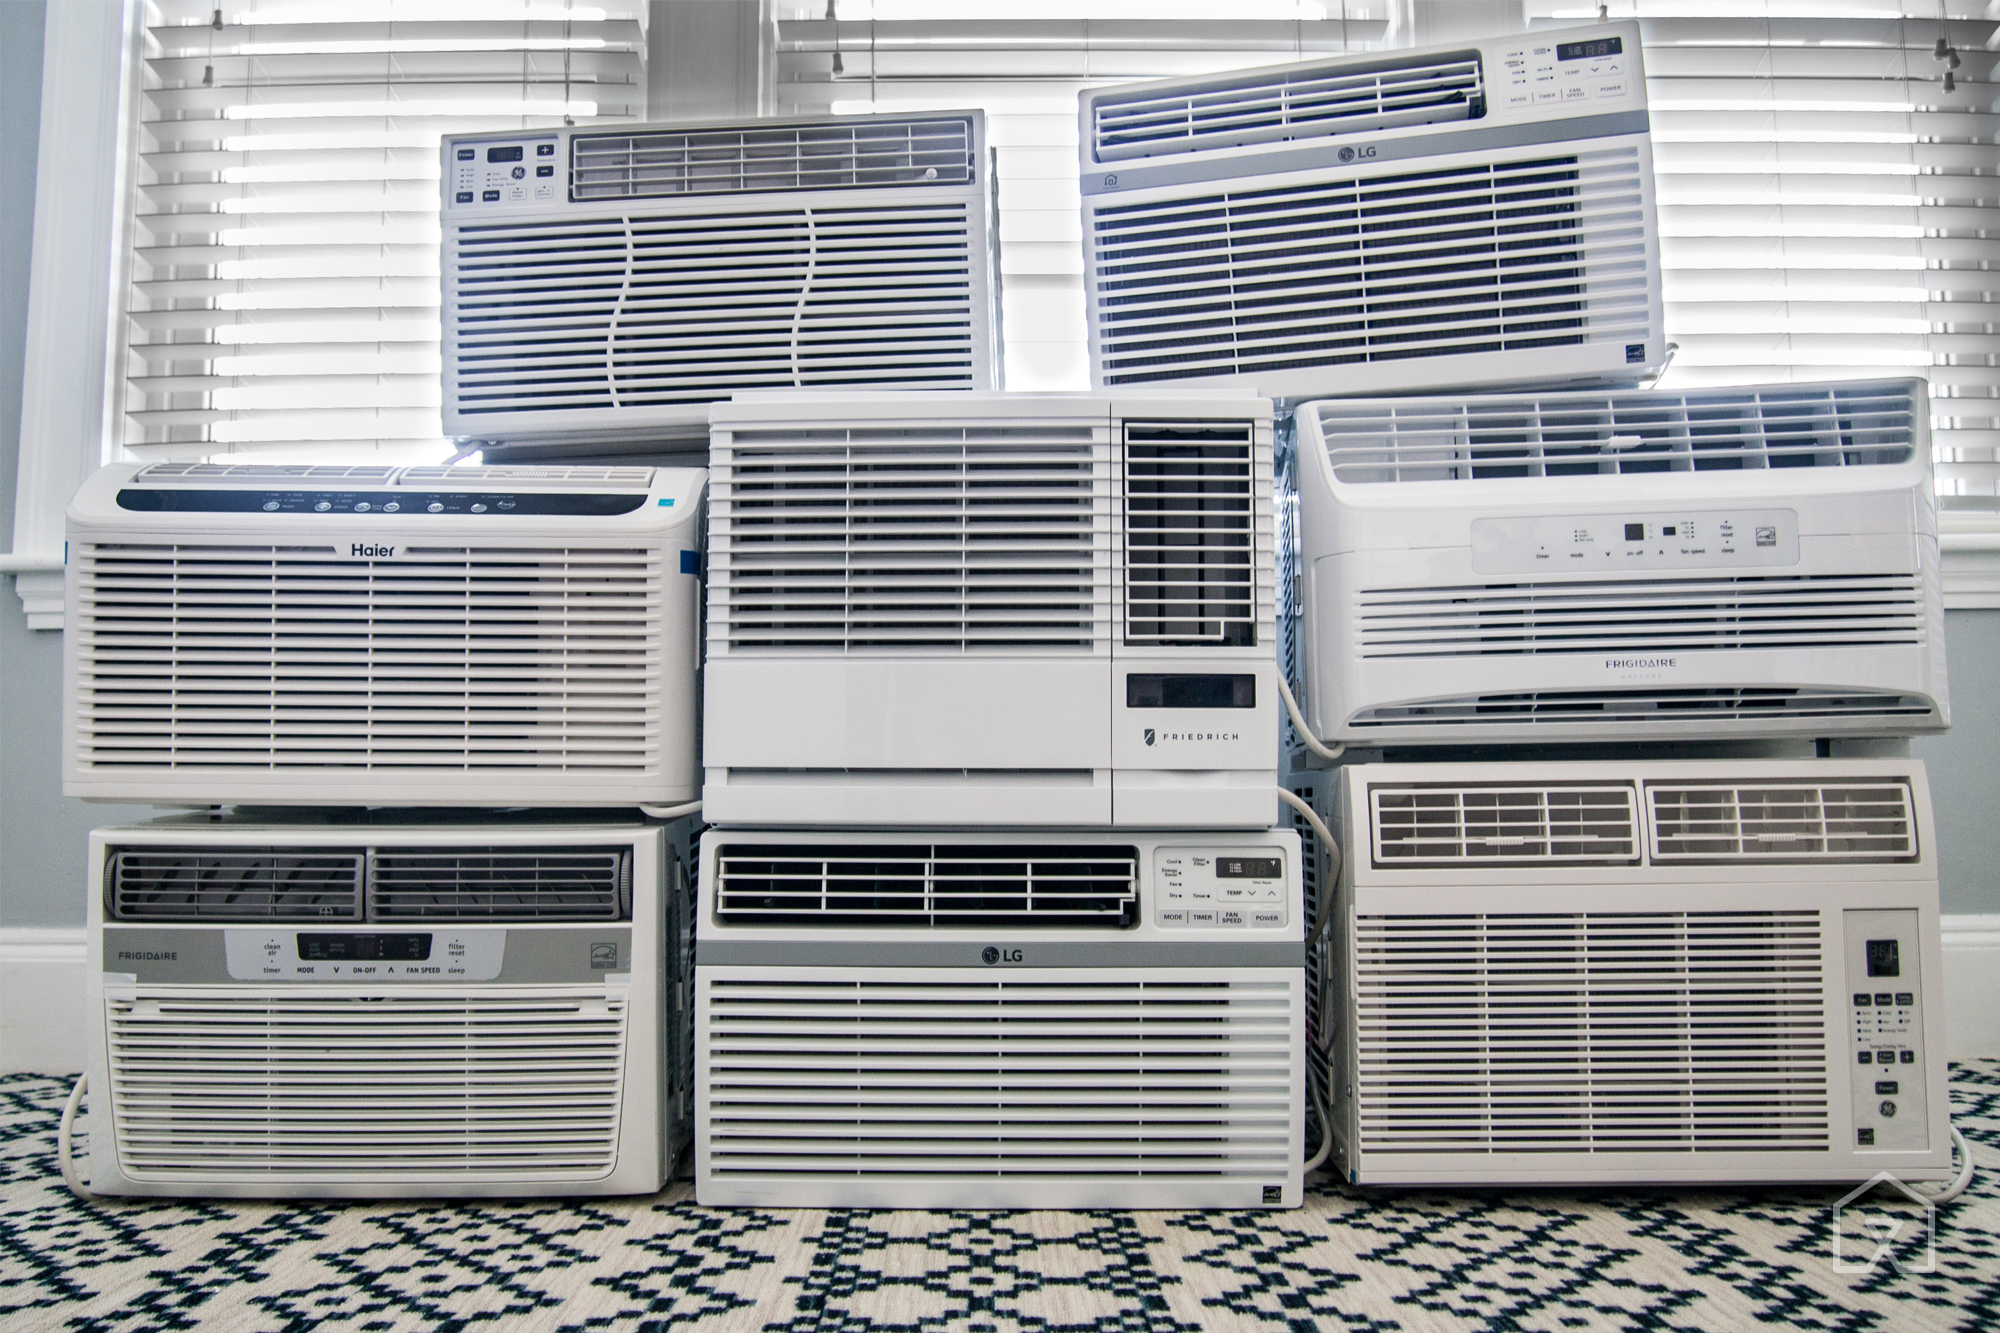 02-air-conditioner-engadget-2000.jpg (2000Ã1333)